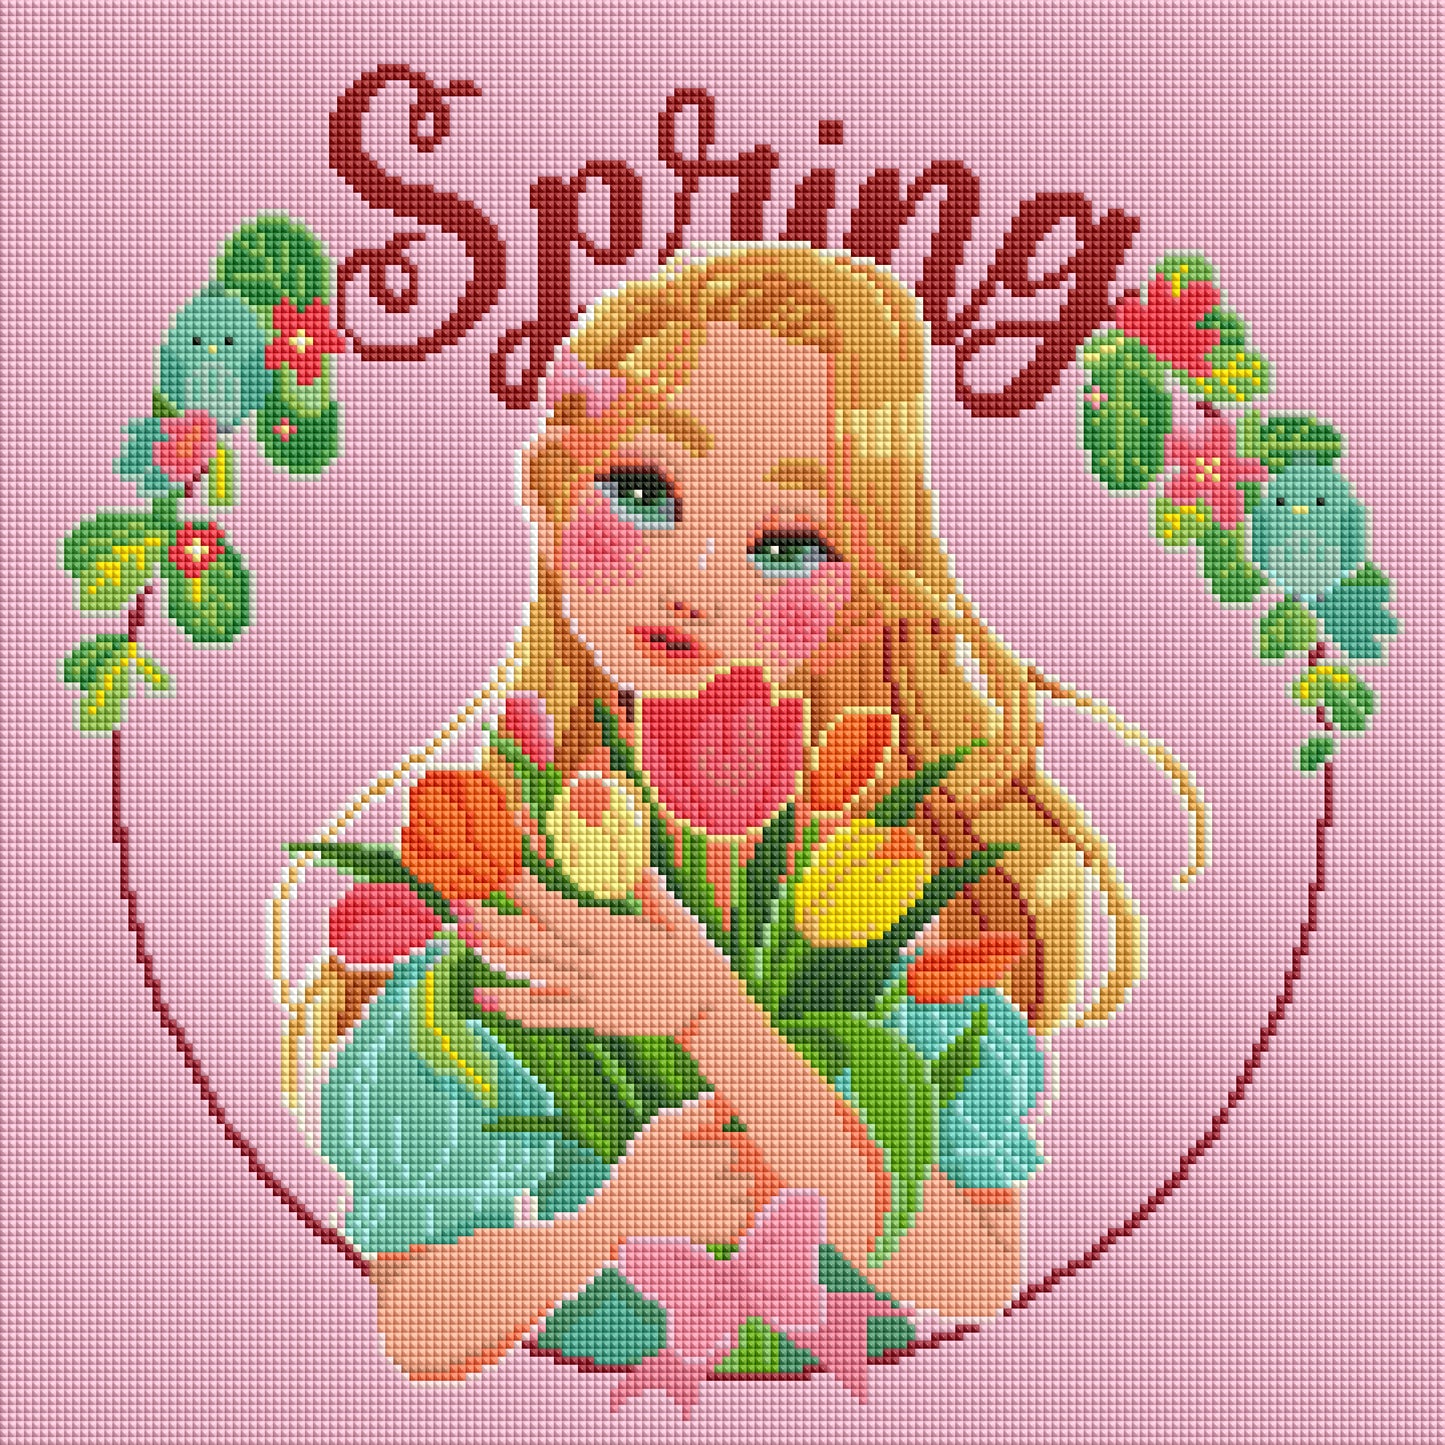 Season’s Flowers – Spring